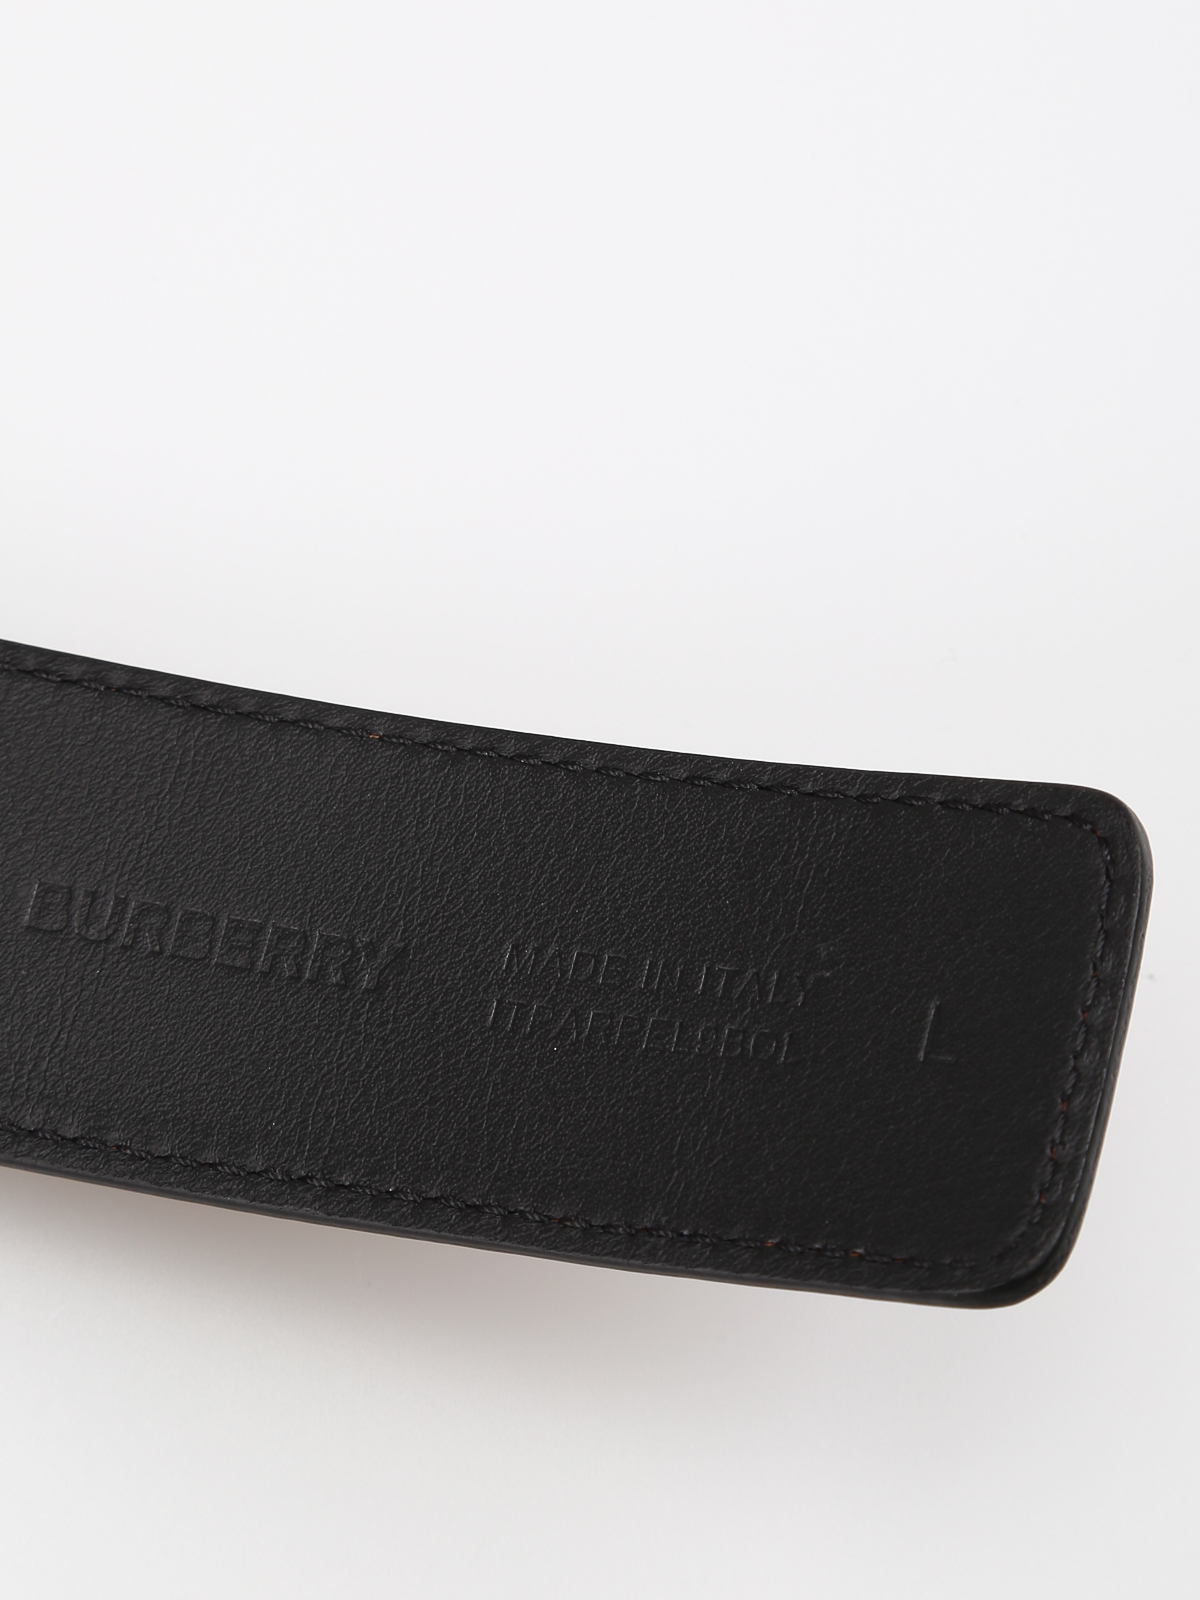 Burberry Malt Brown/Black Ladies TB Buckle Reversible Leather Belt